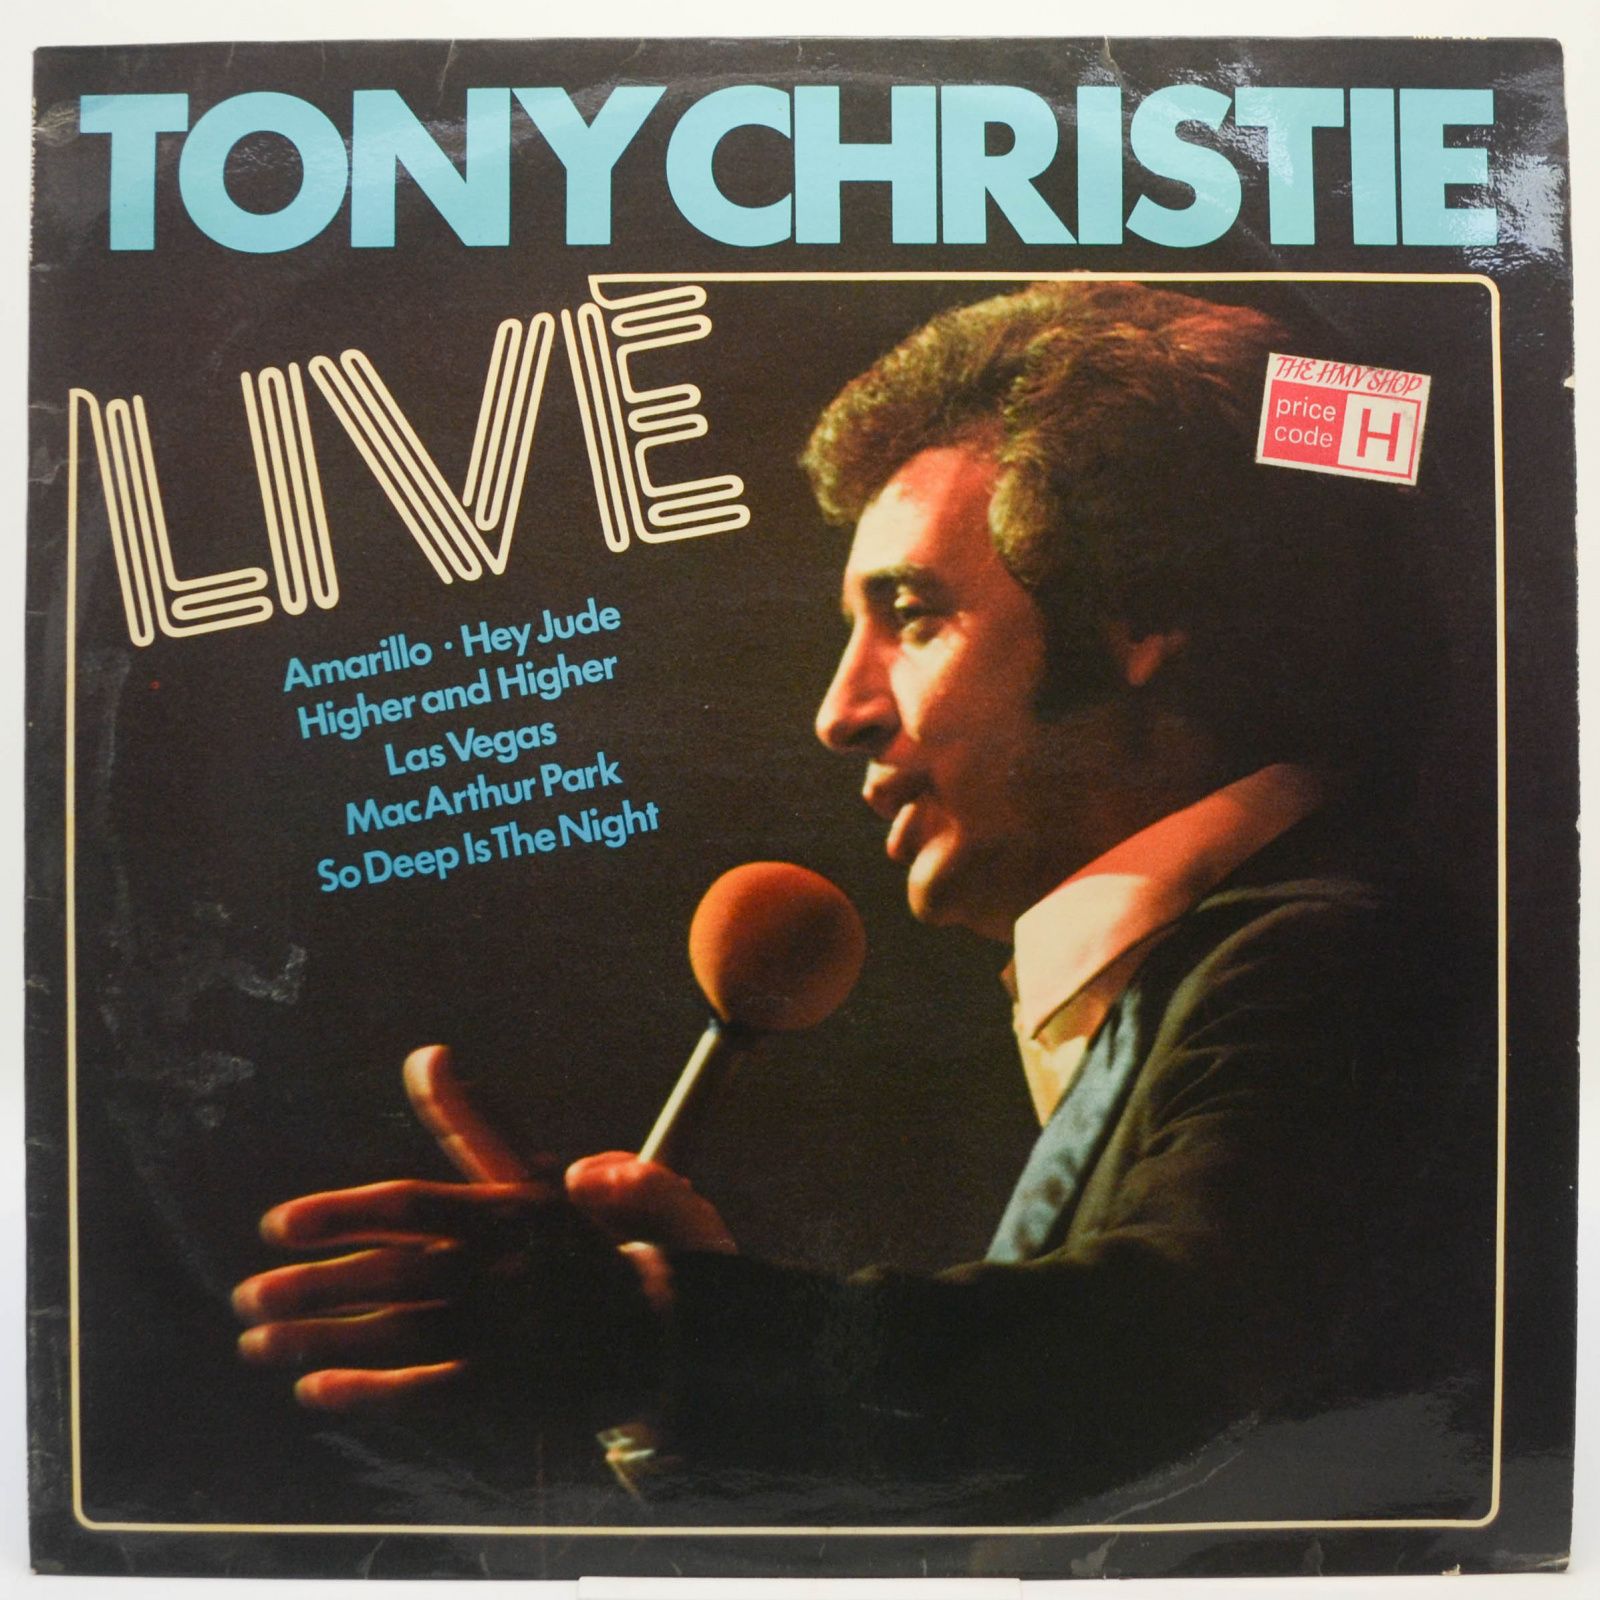 Live (UK), 1975